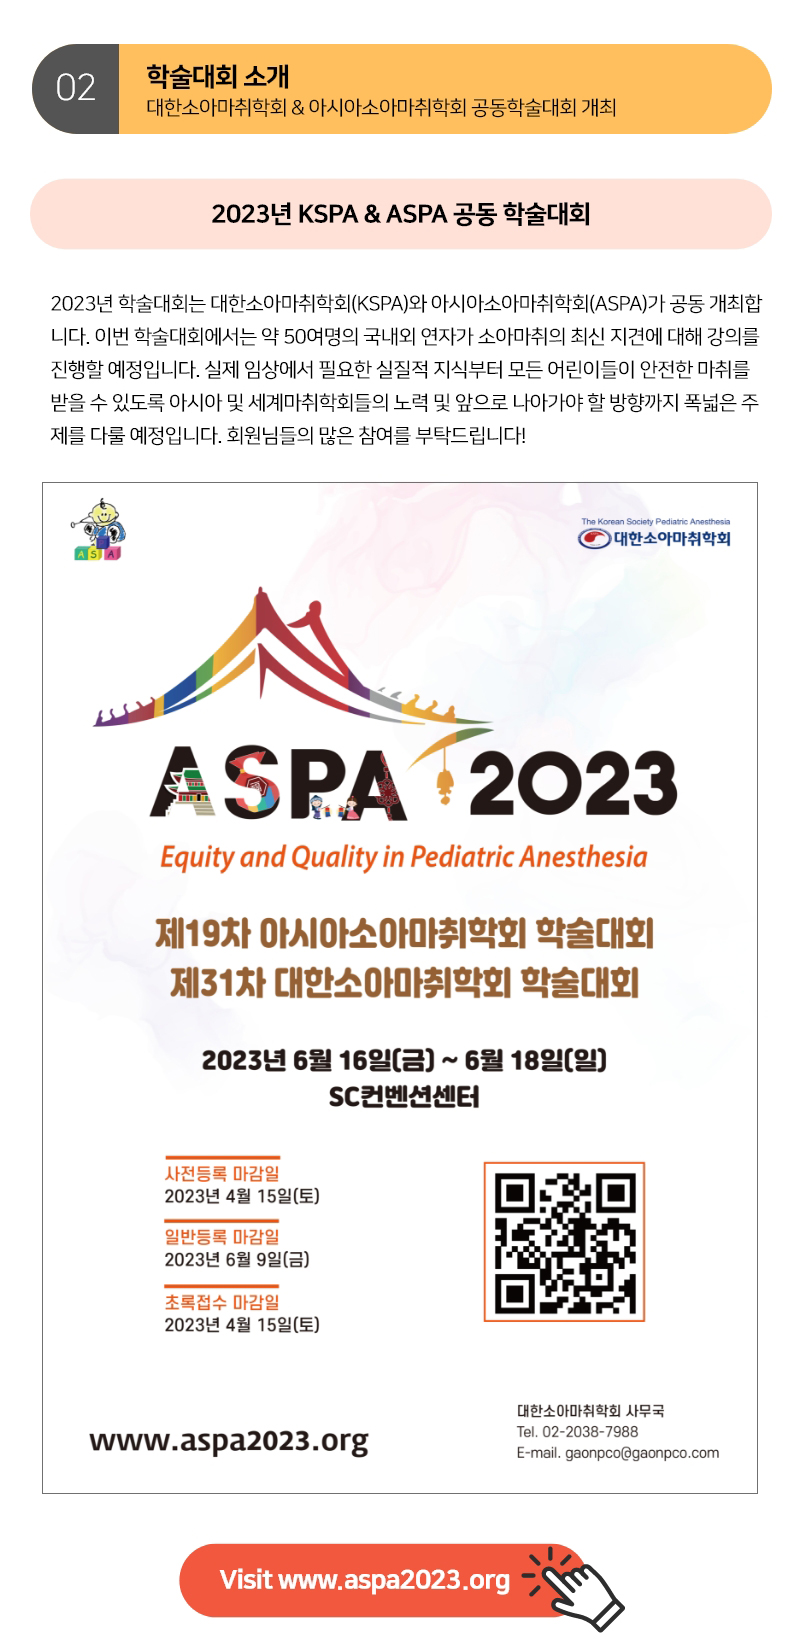 ASPA 2023